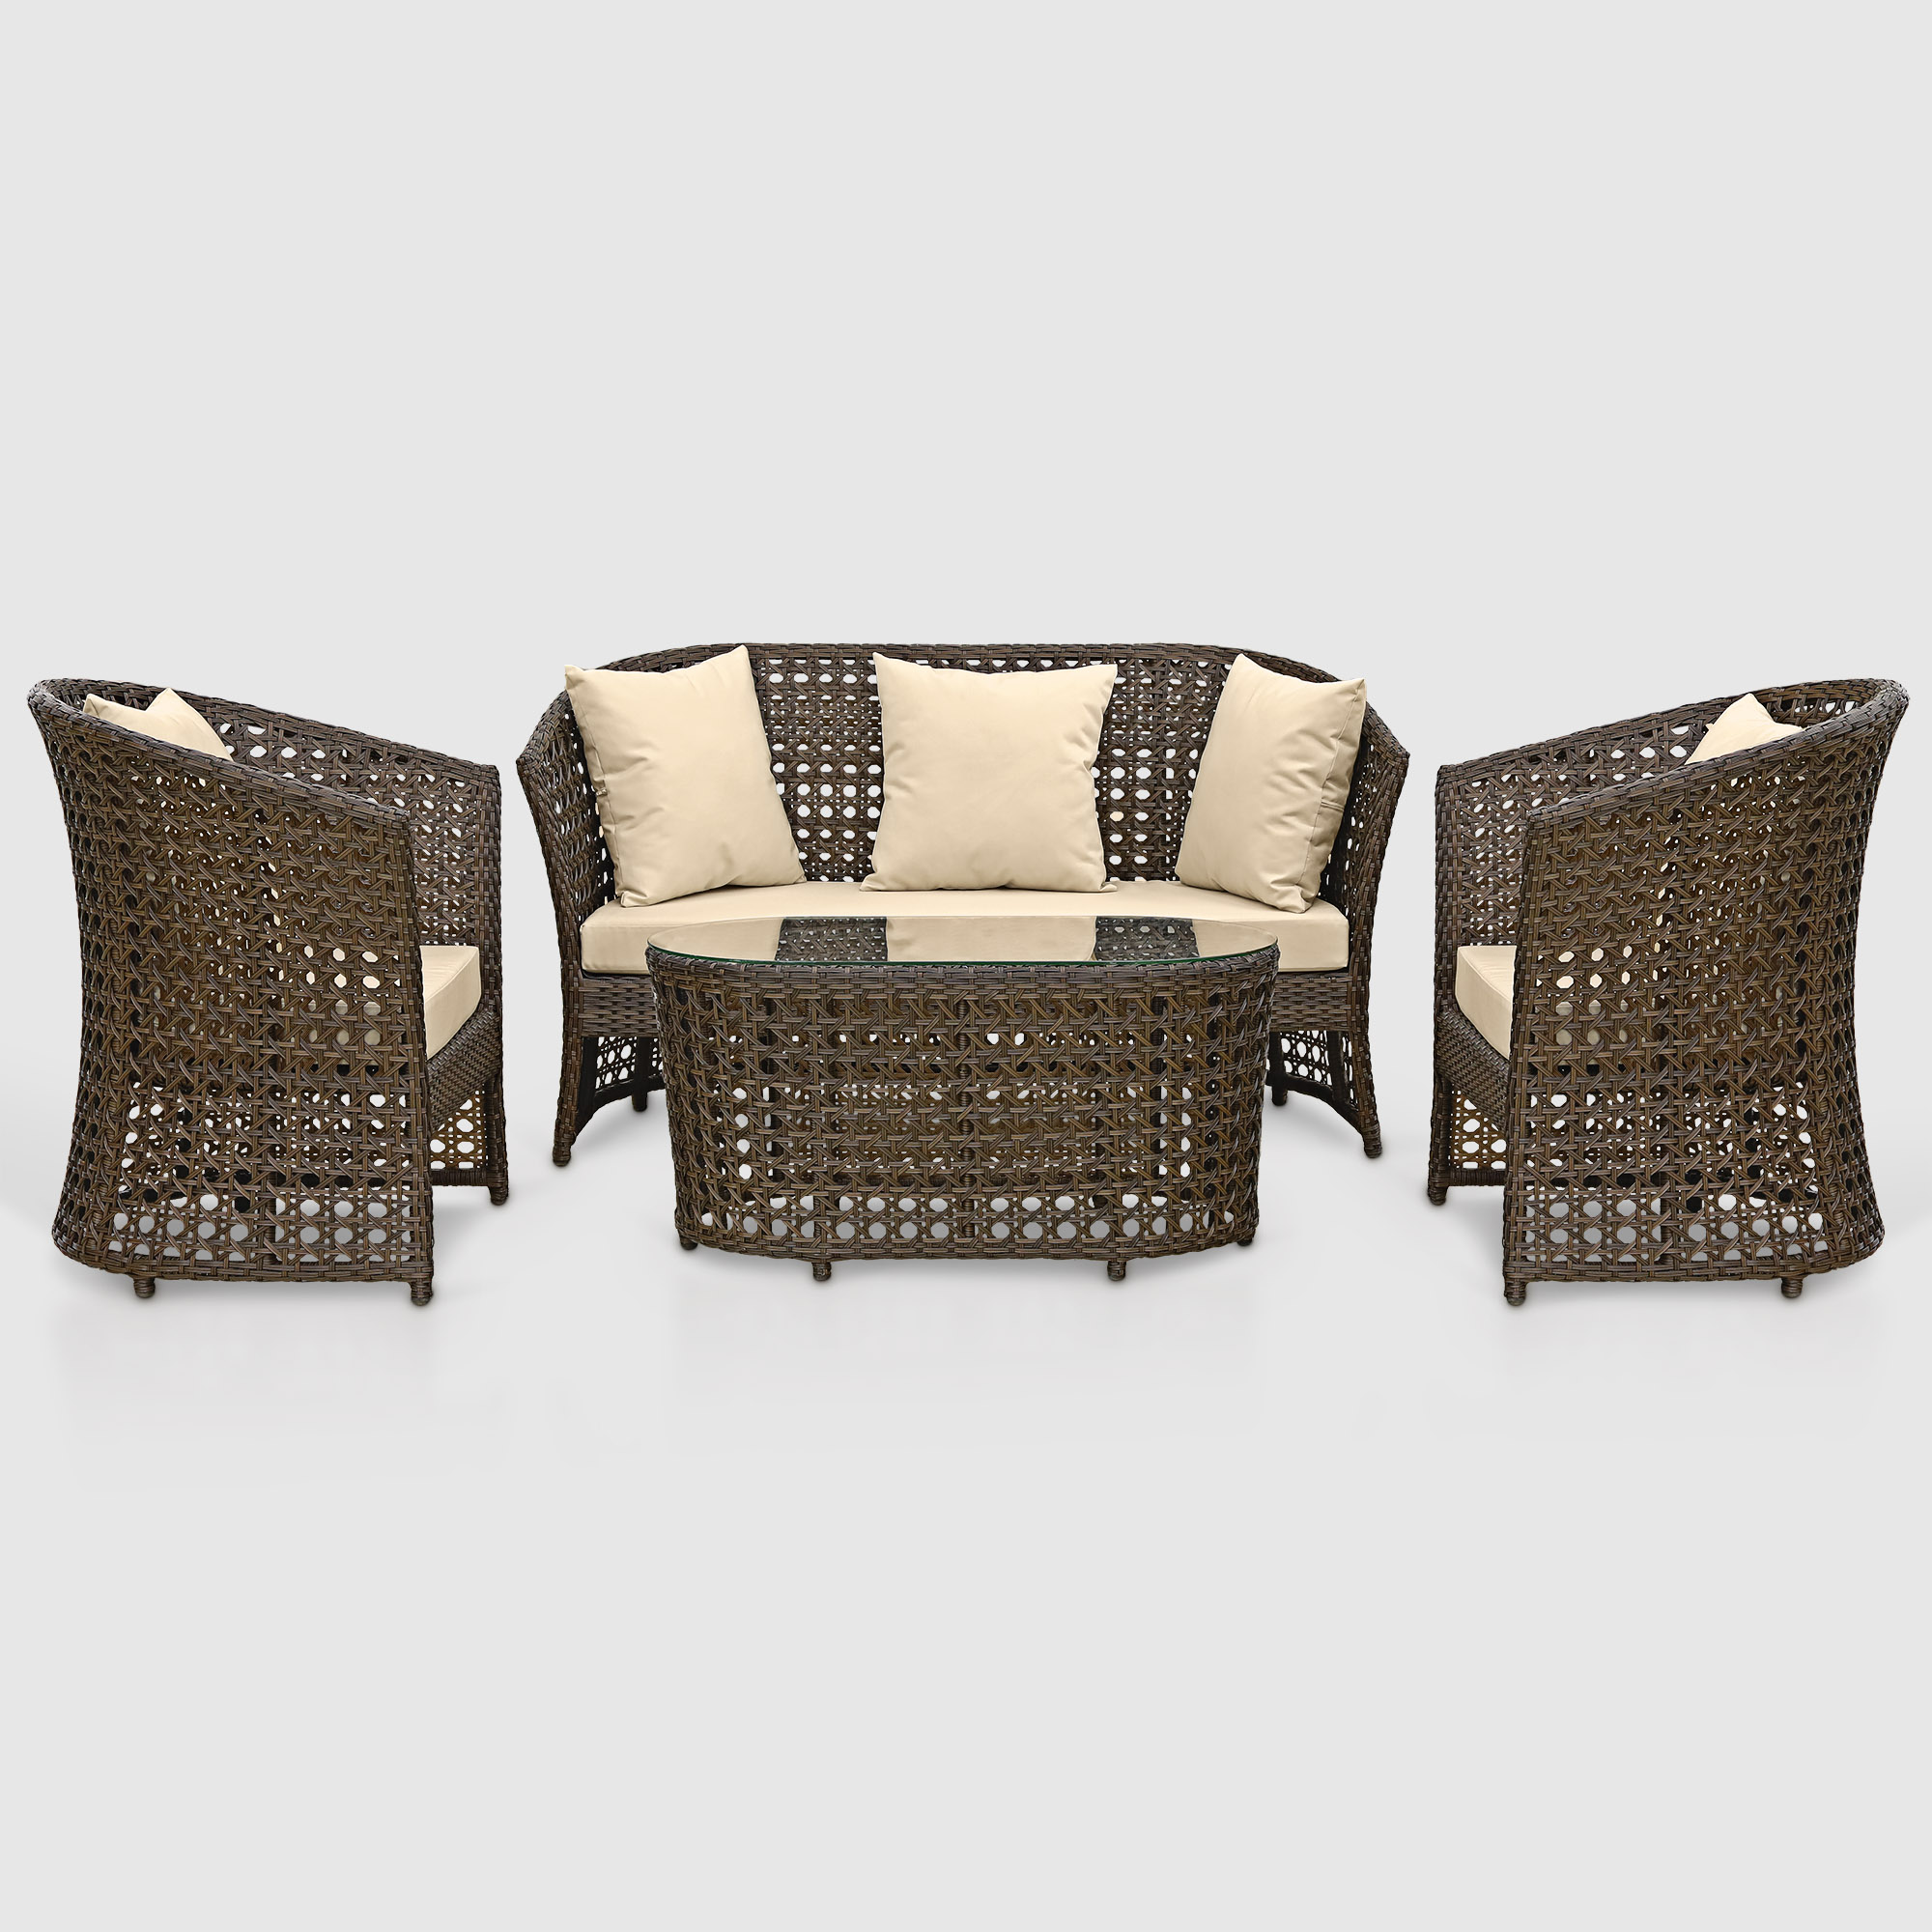 Комплект мебели Ns Rattan Linda коричневый с бежевым 4 предмета, цвет бежевый, размер 155х90х70 - фото 1